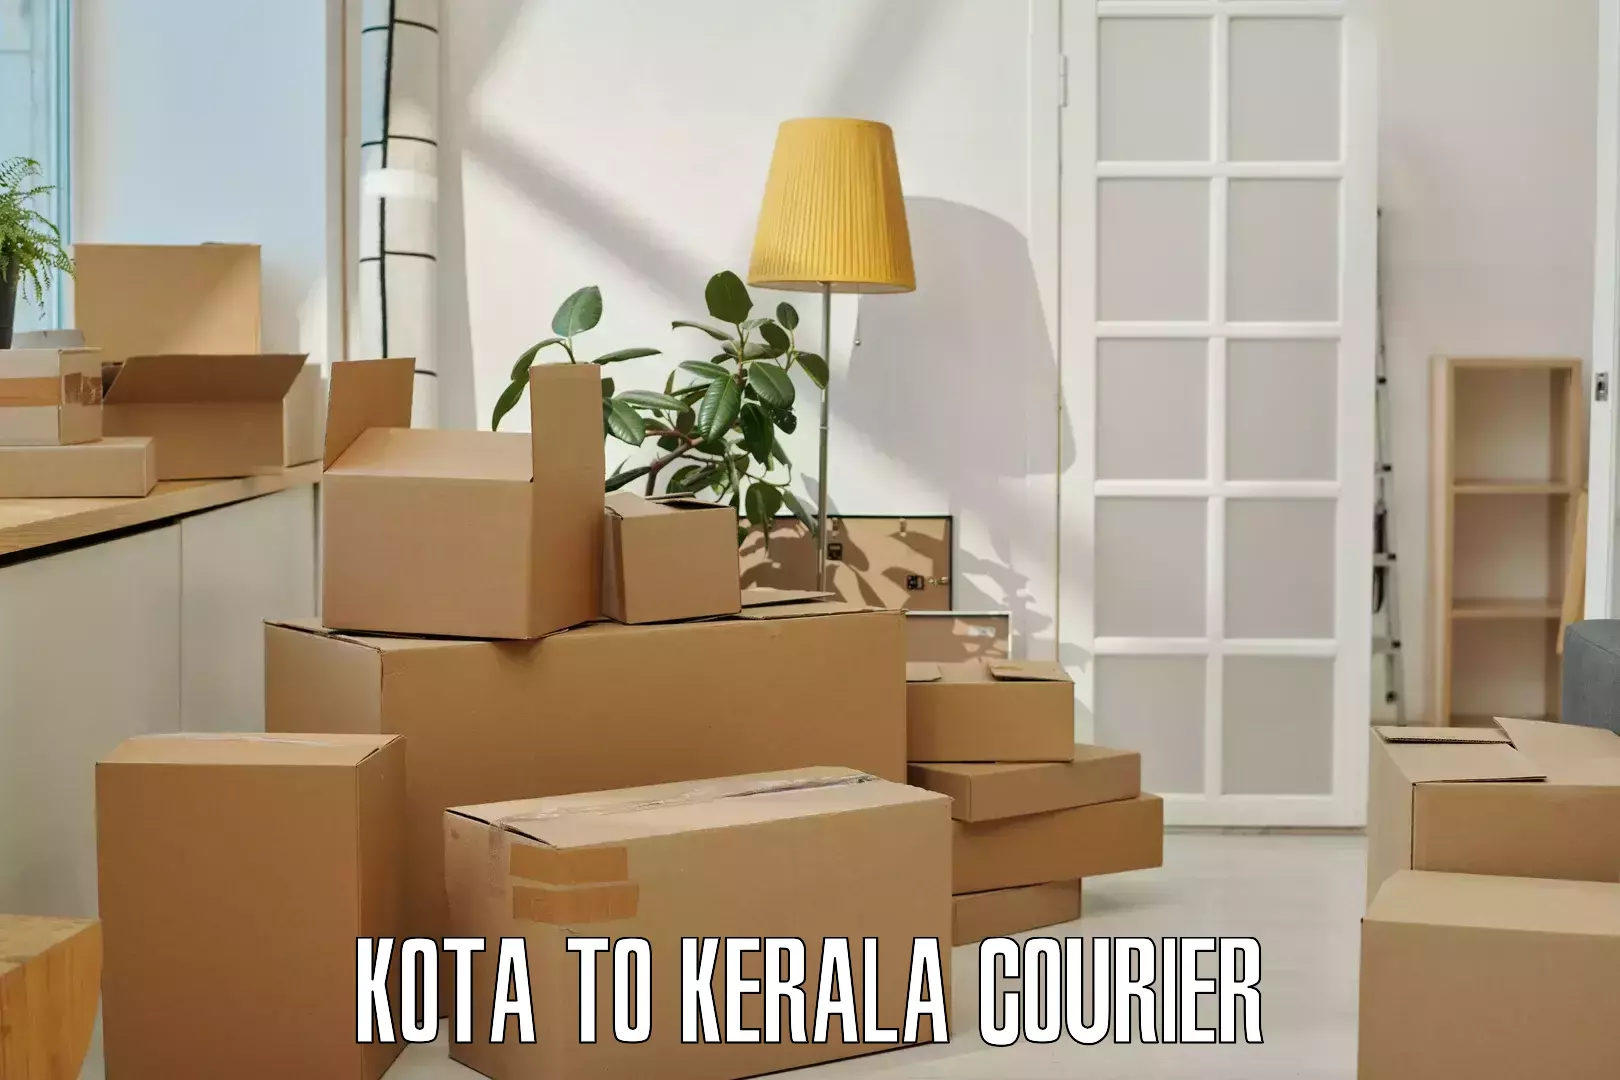 User-friendly delivery service Kota to Kerala